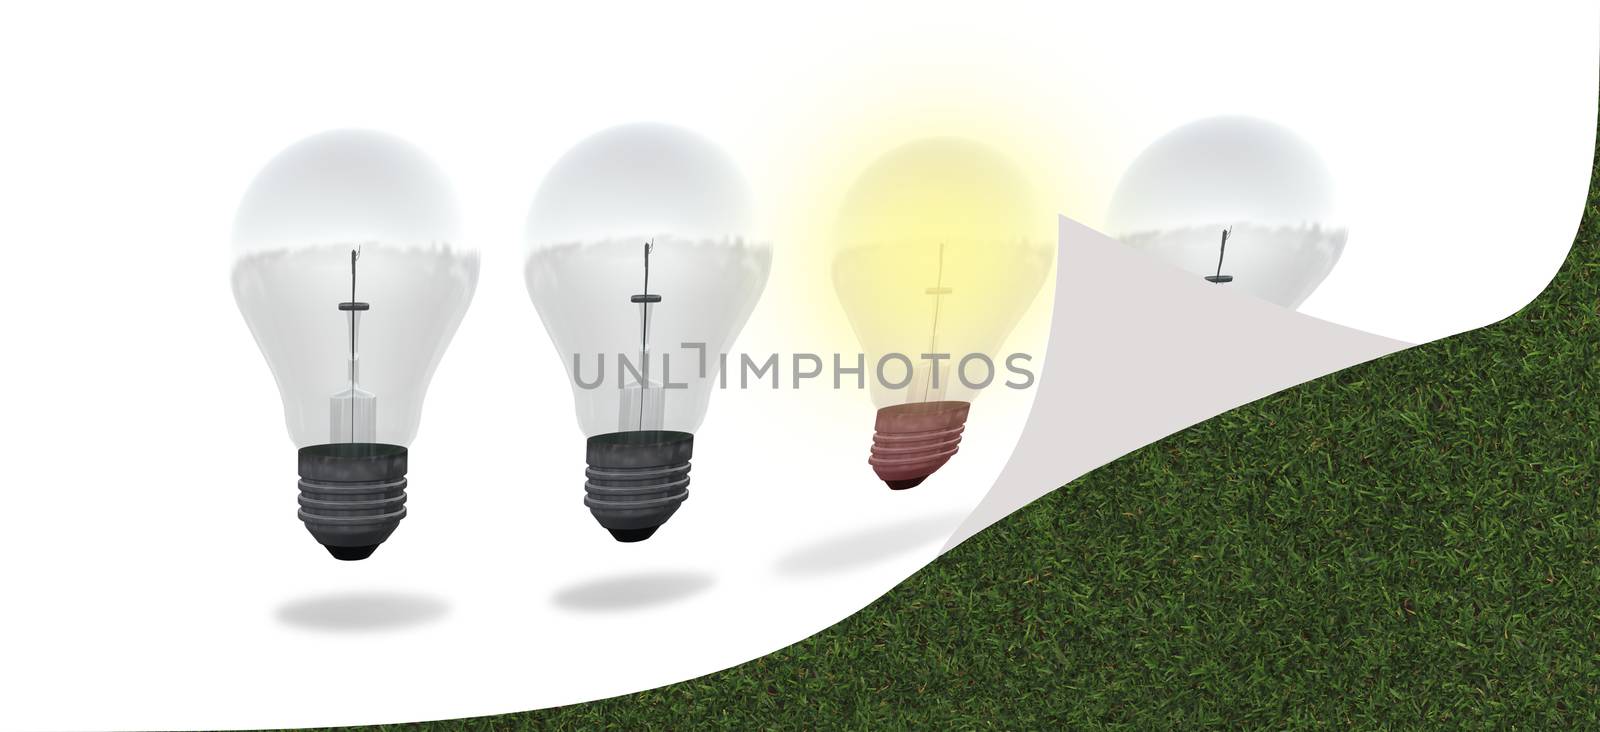 conceptual digital light bulb design by vitanovski